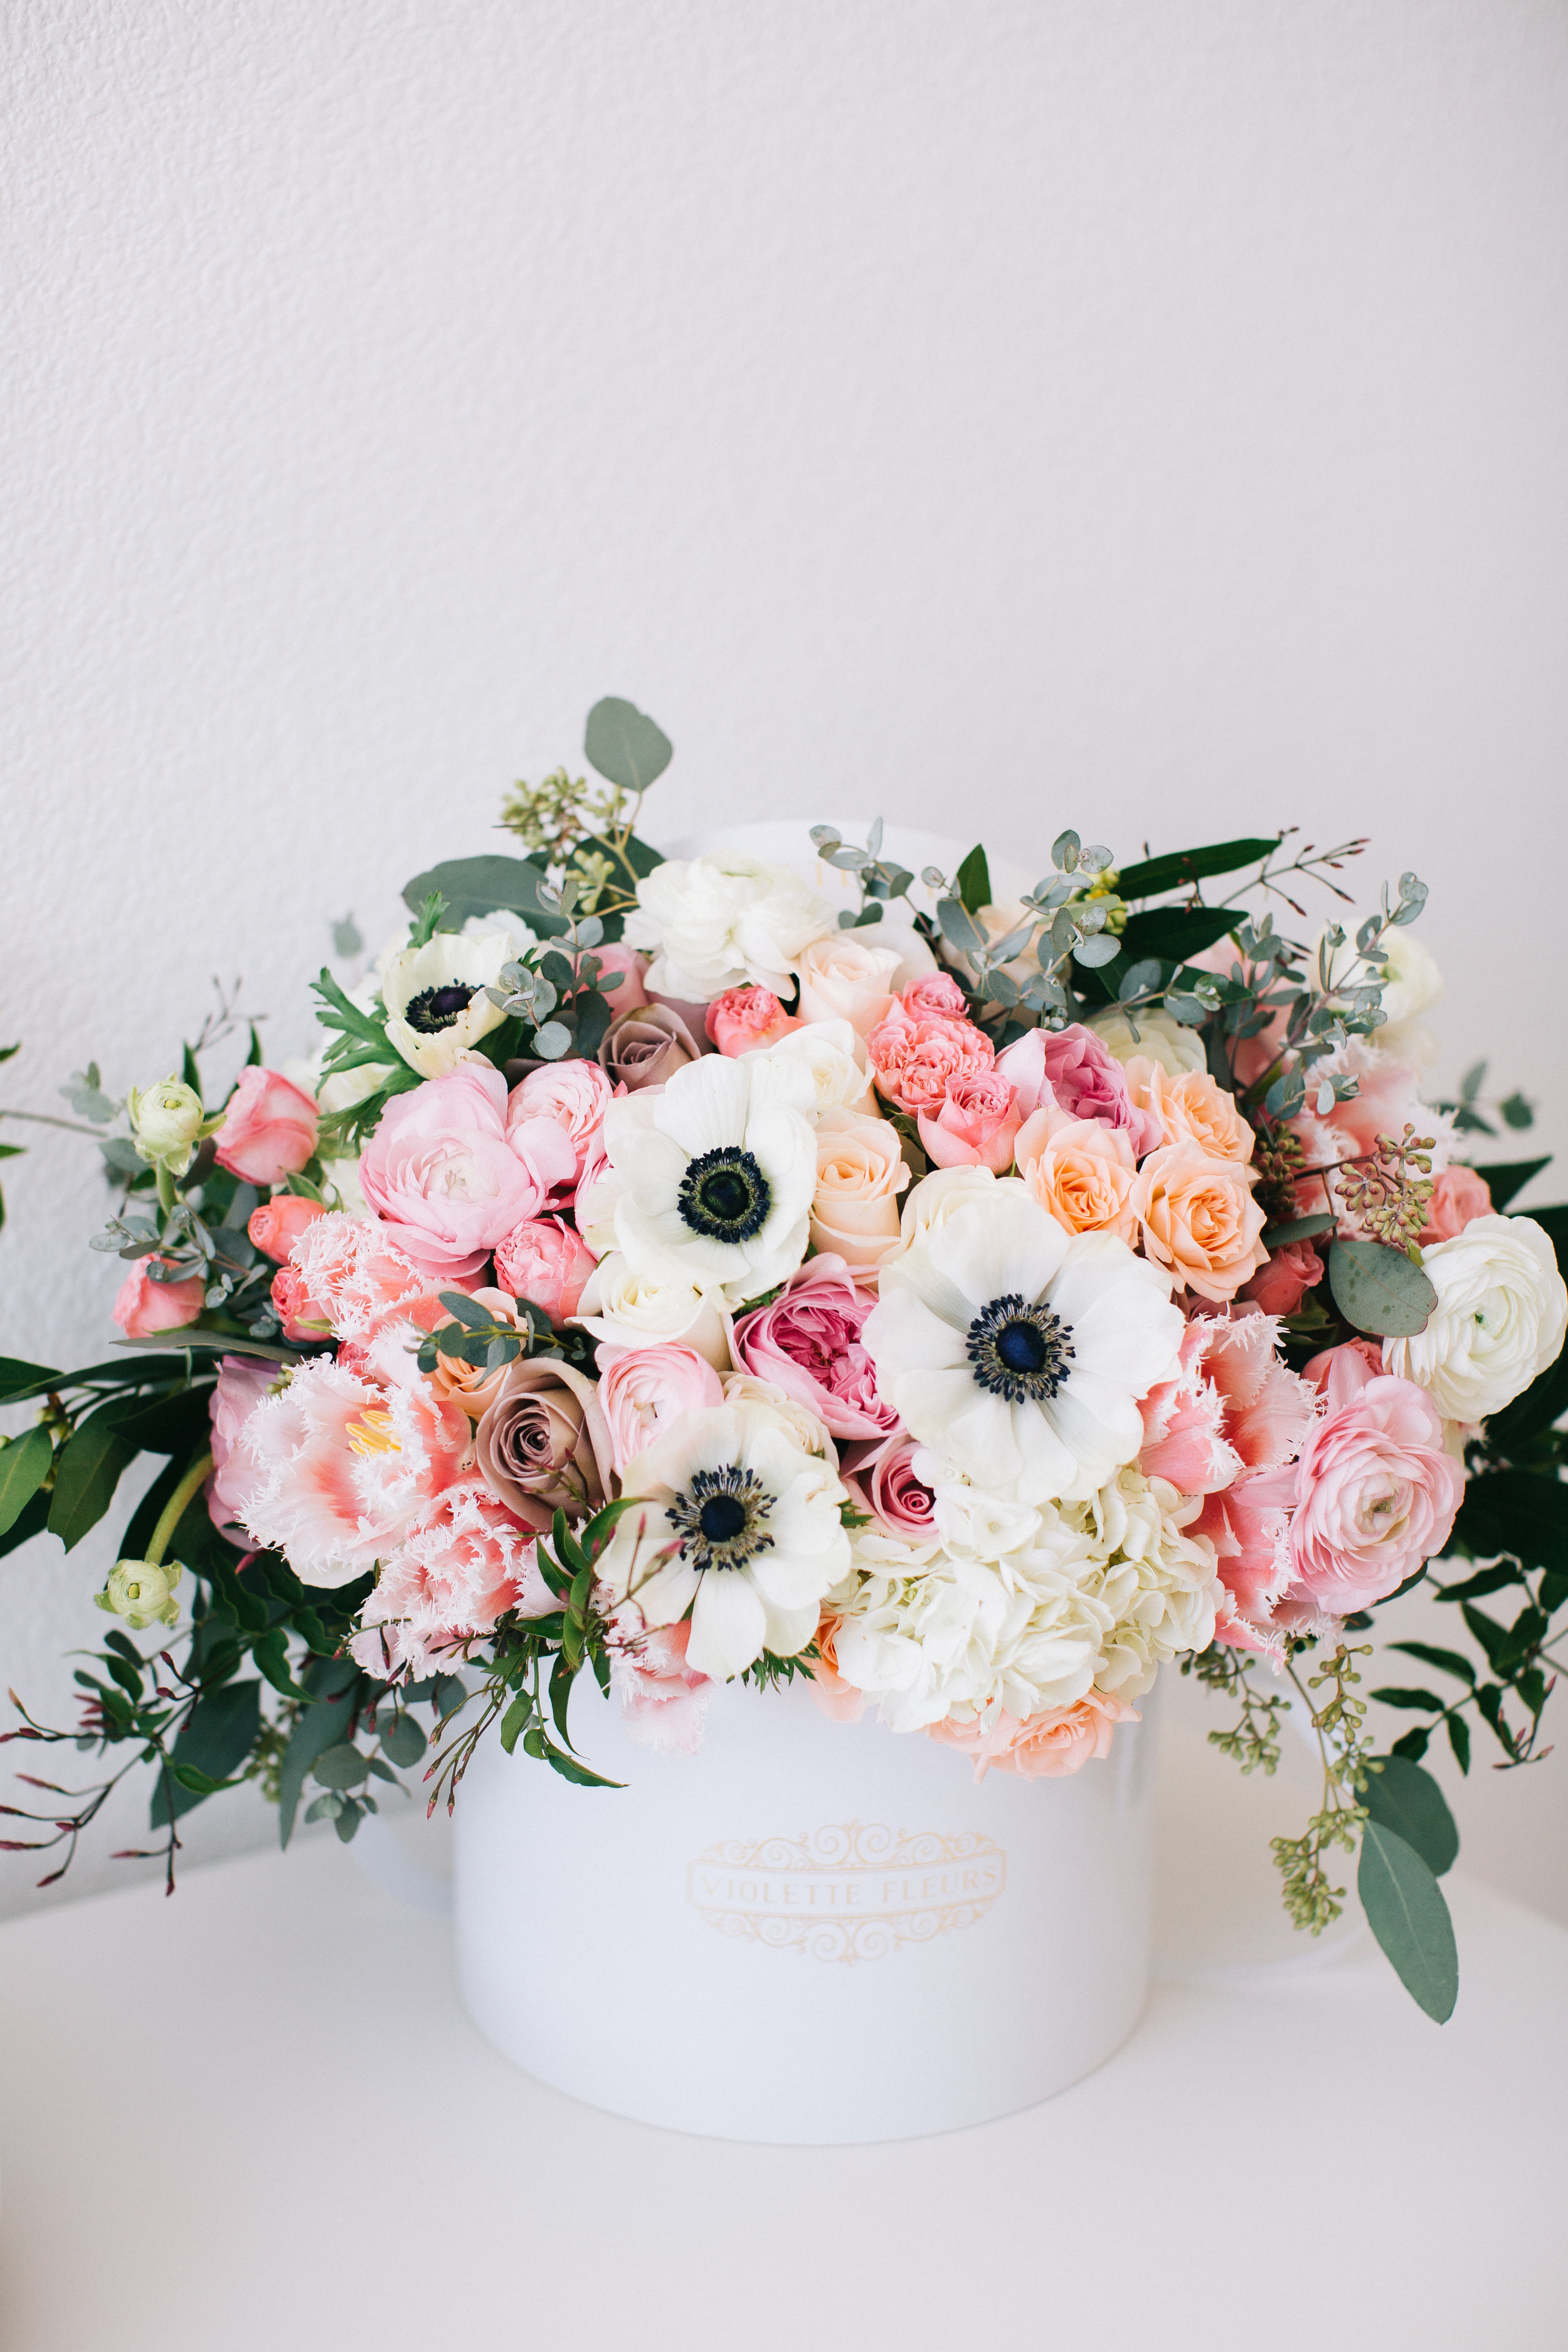 Violette-fleurs-roseville-sacramento-california-anna-perevertaylo-photography-blush-hatbox-flowers.jpg